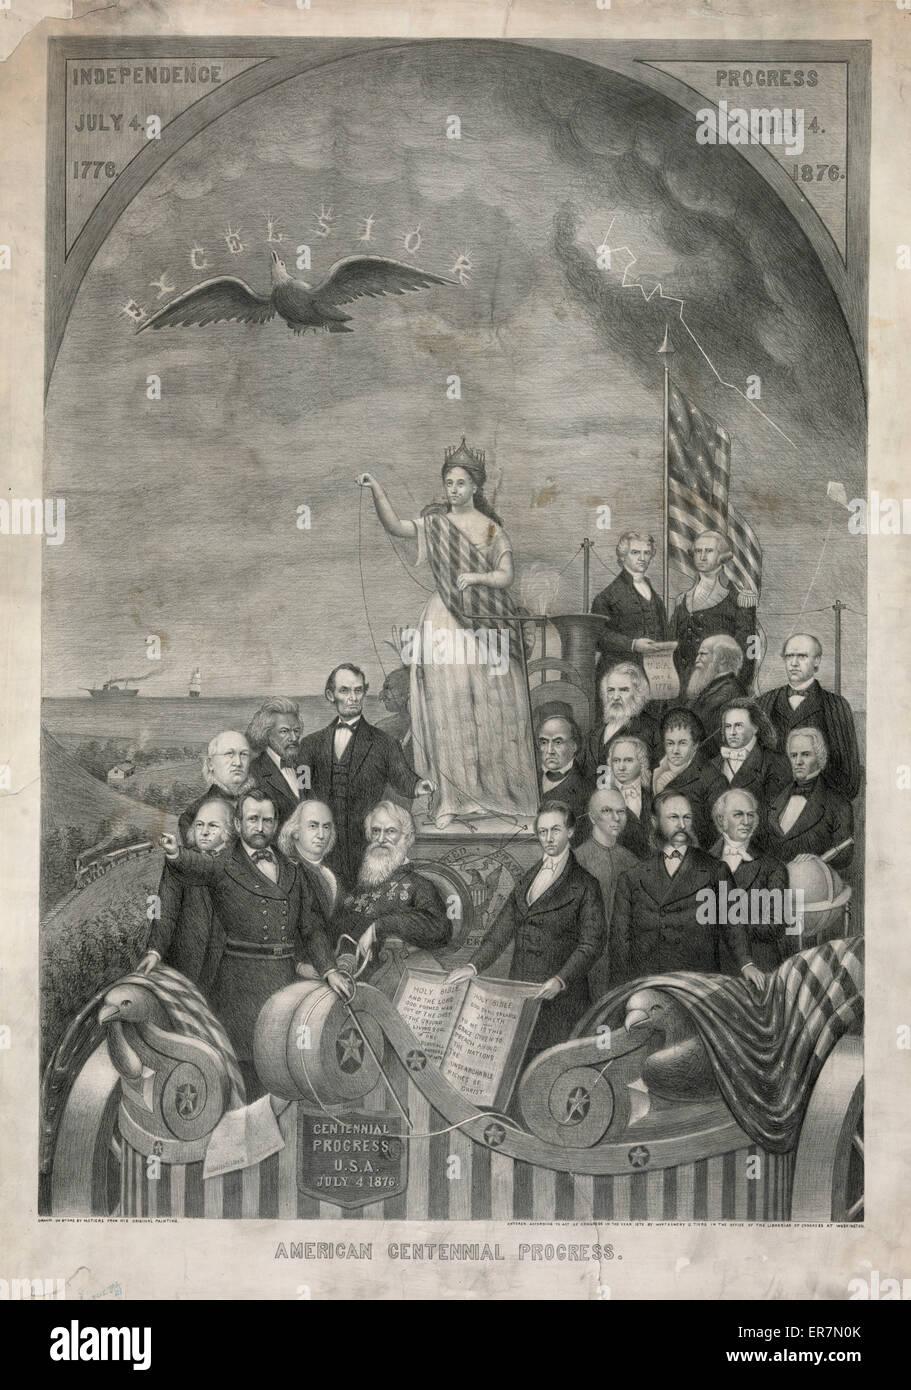 American Centennial Progress Stock Photo